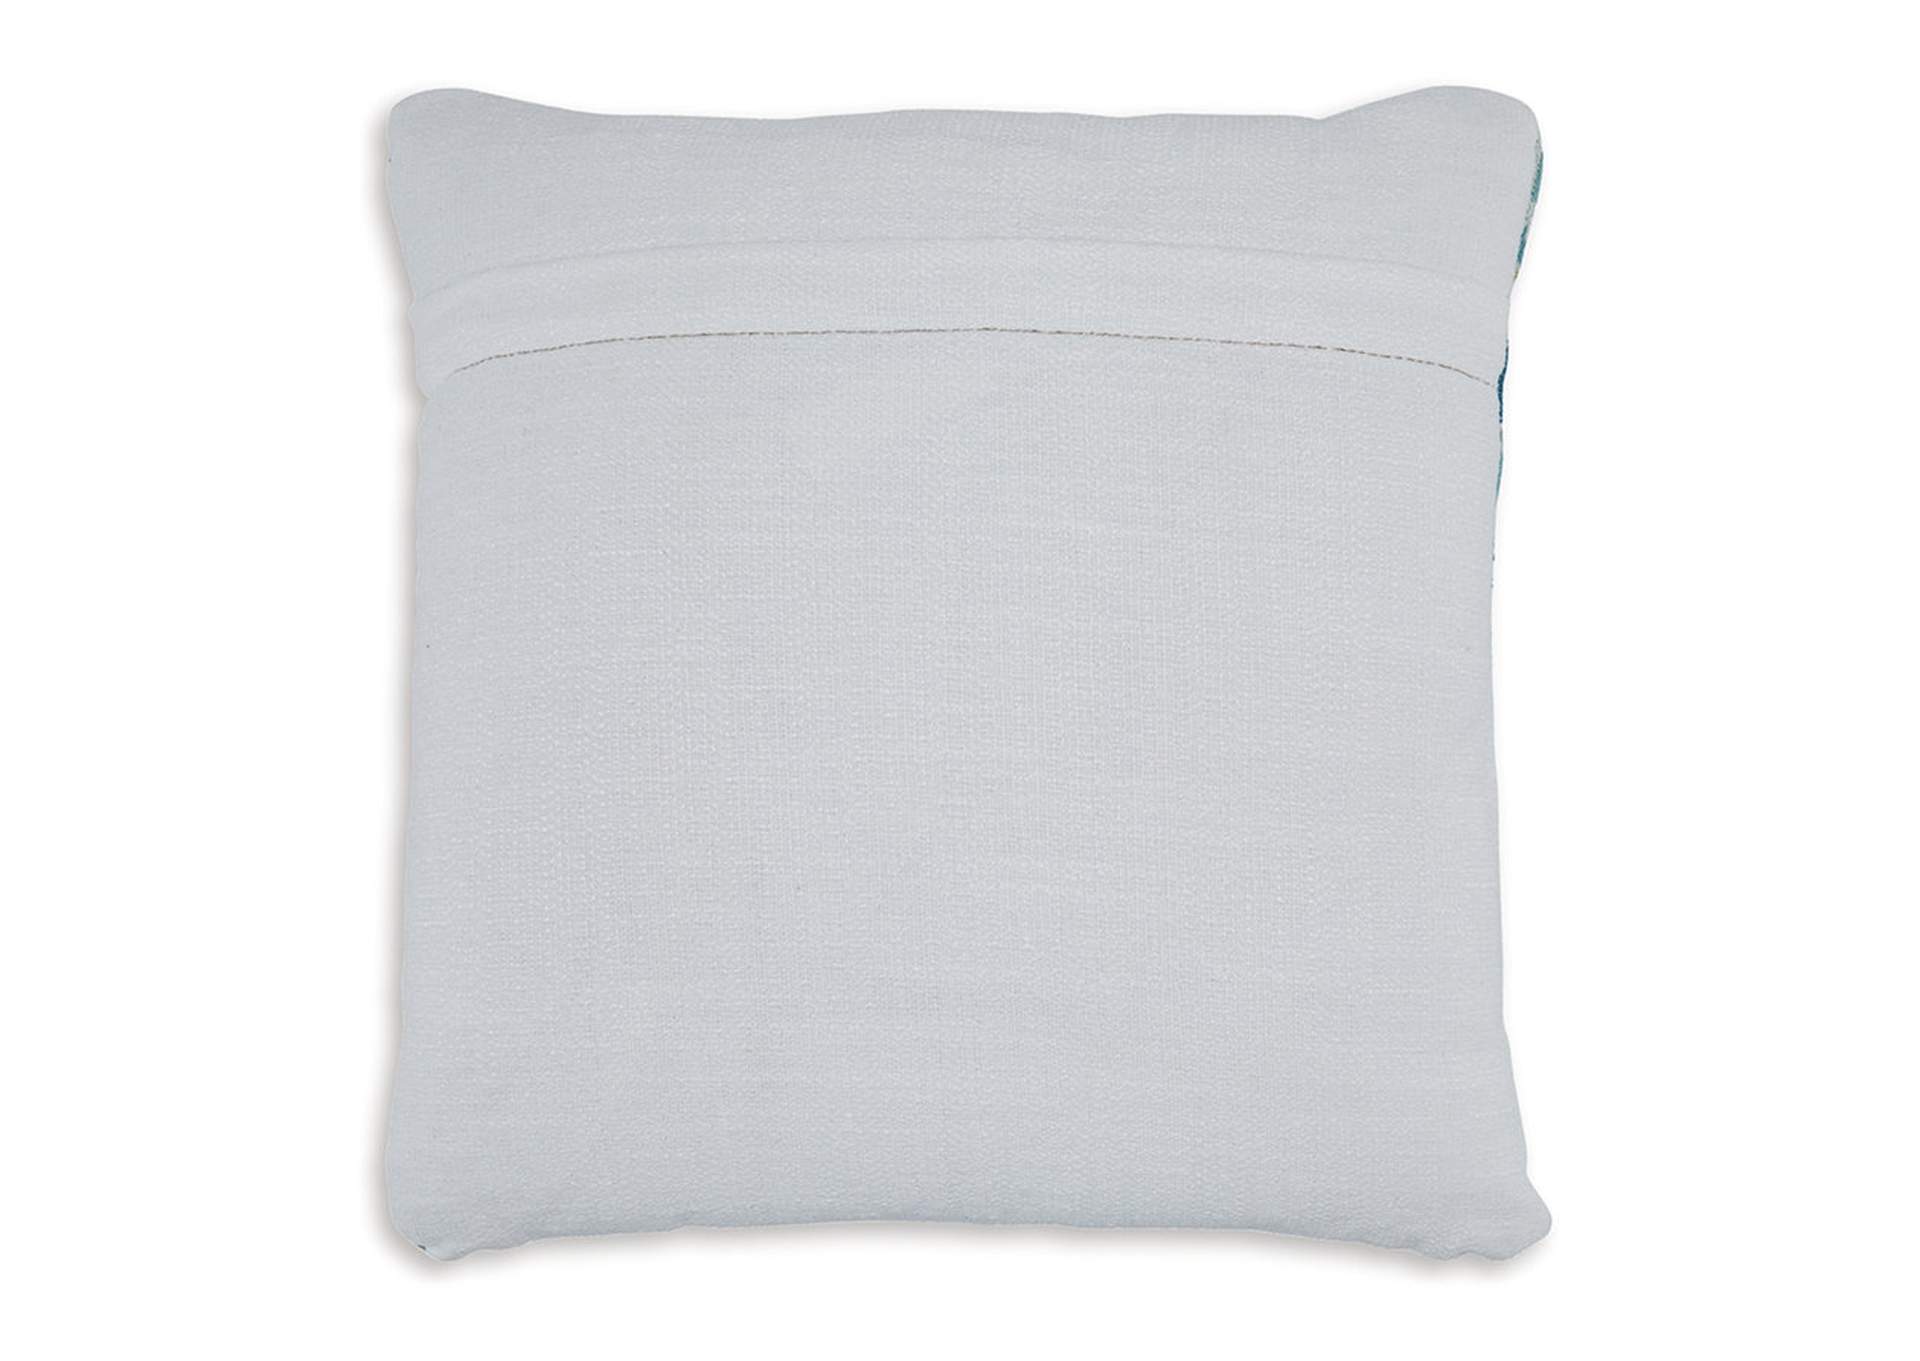 Seanow Next-Gen Nuvella Pillow,Signature Design By Ashley